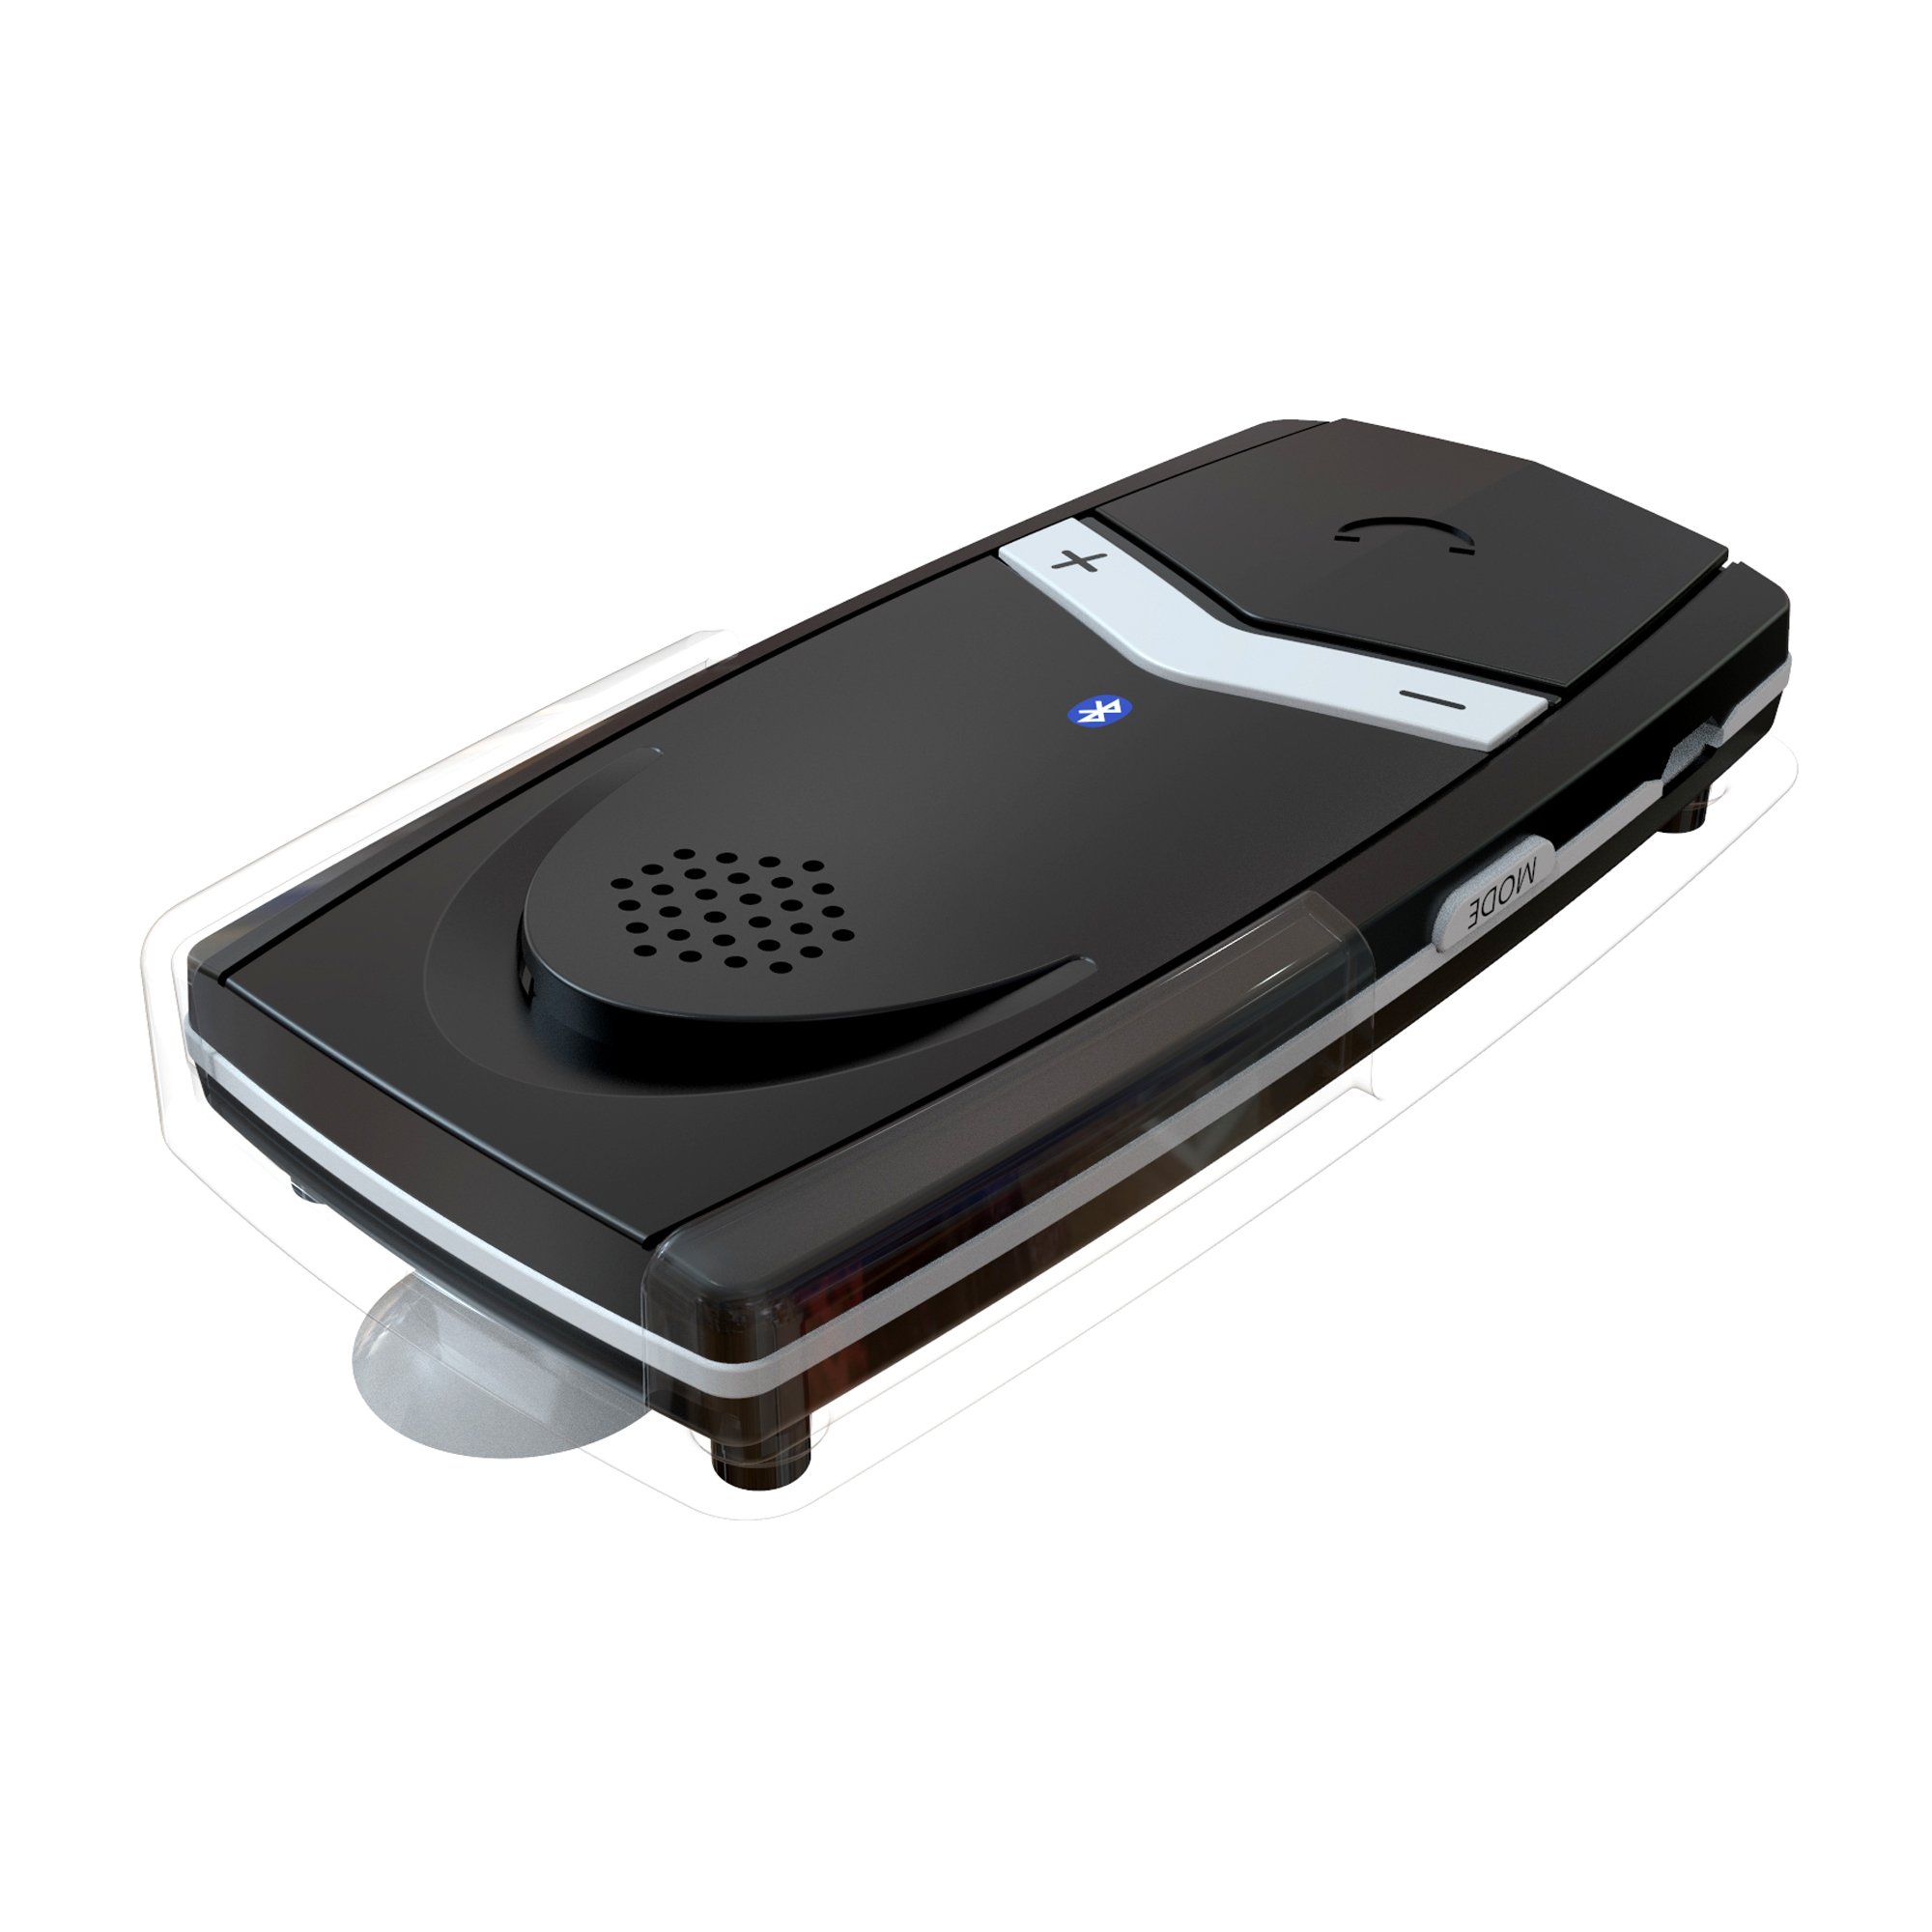  SUNITEC Hands Free Bluetooth car Speaker for Cell